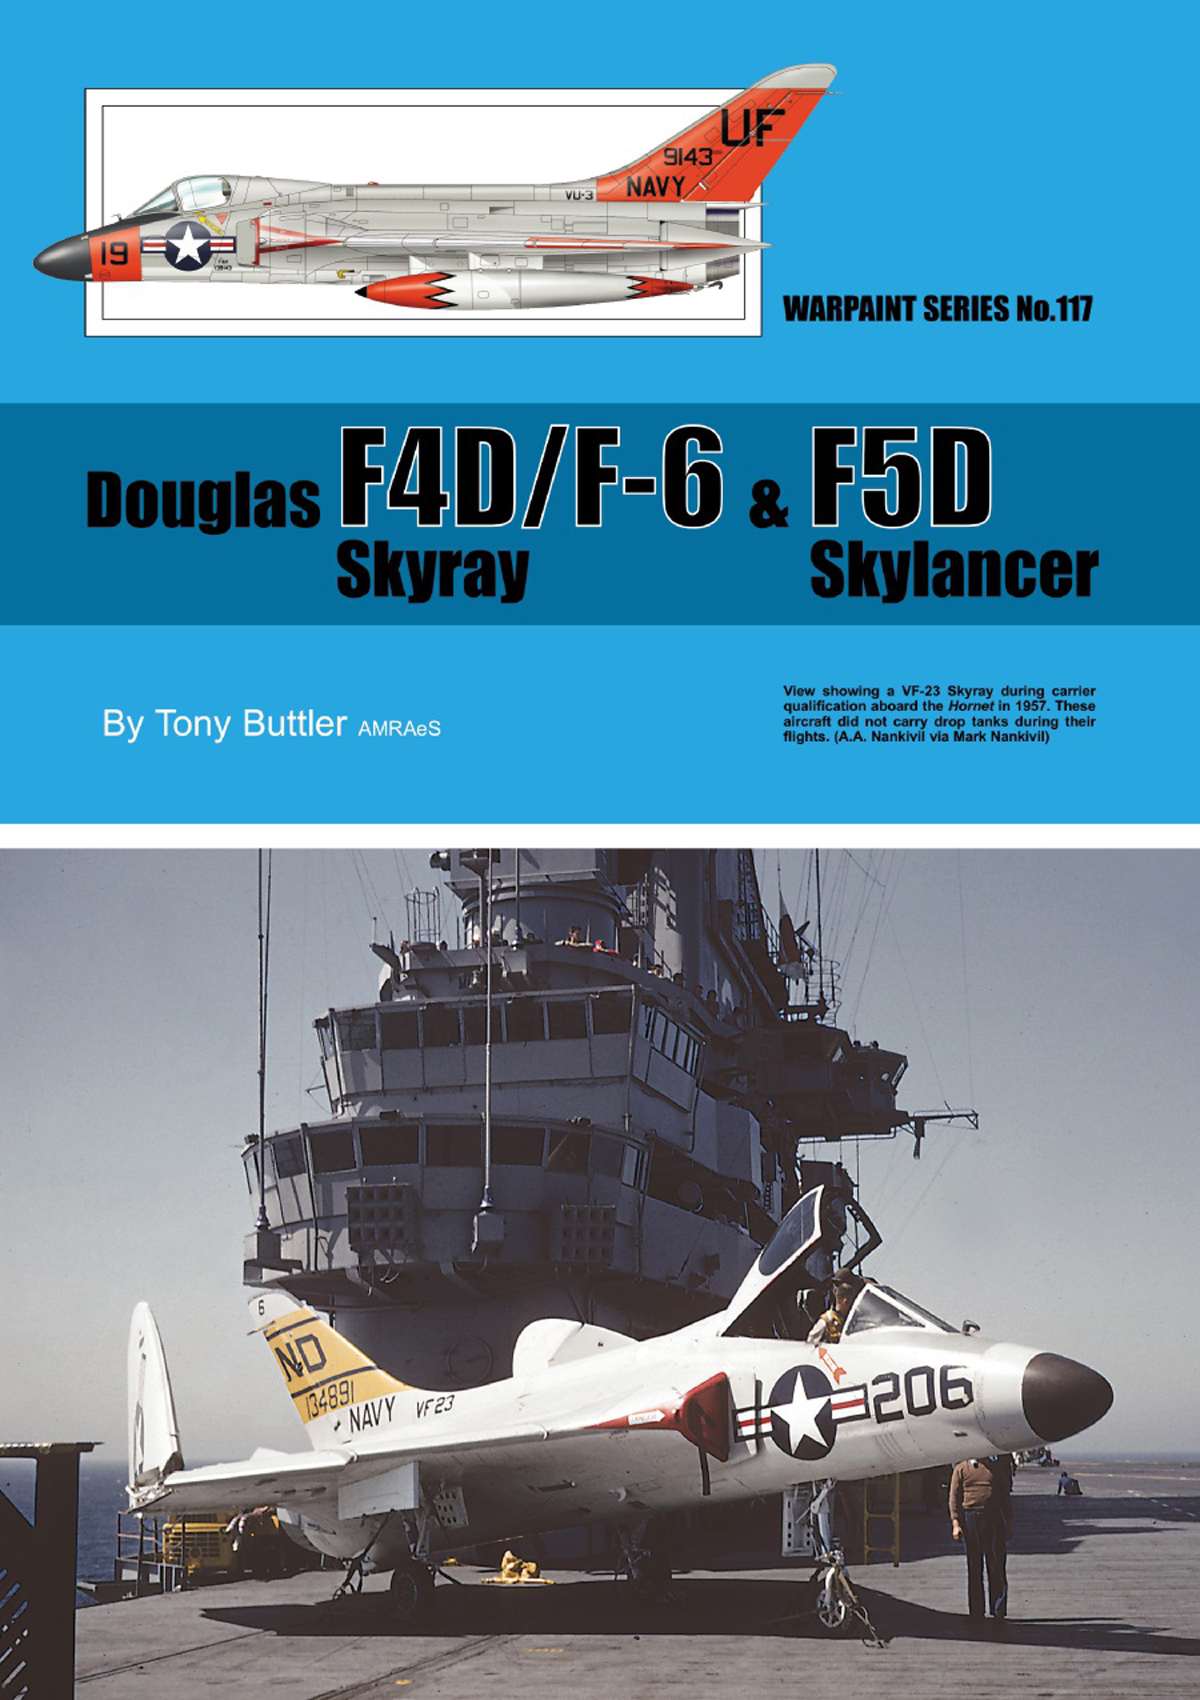 N117 - Douglas F4D/F-6 Skyray & F5D Skylancer